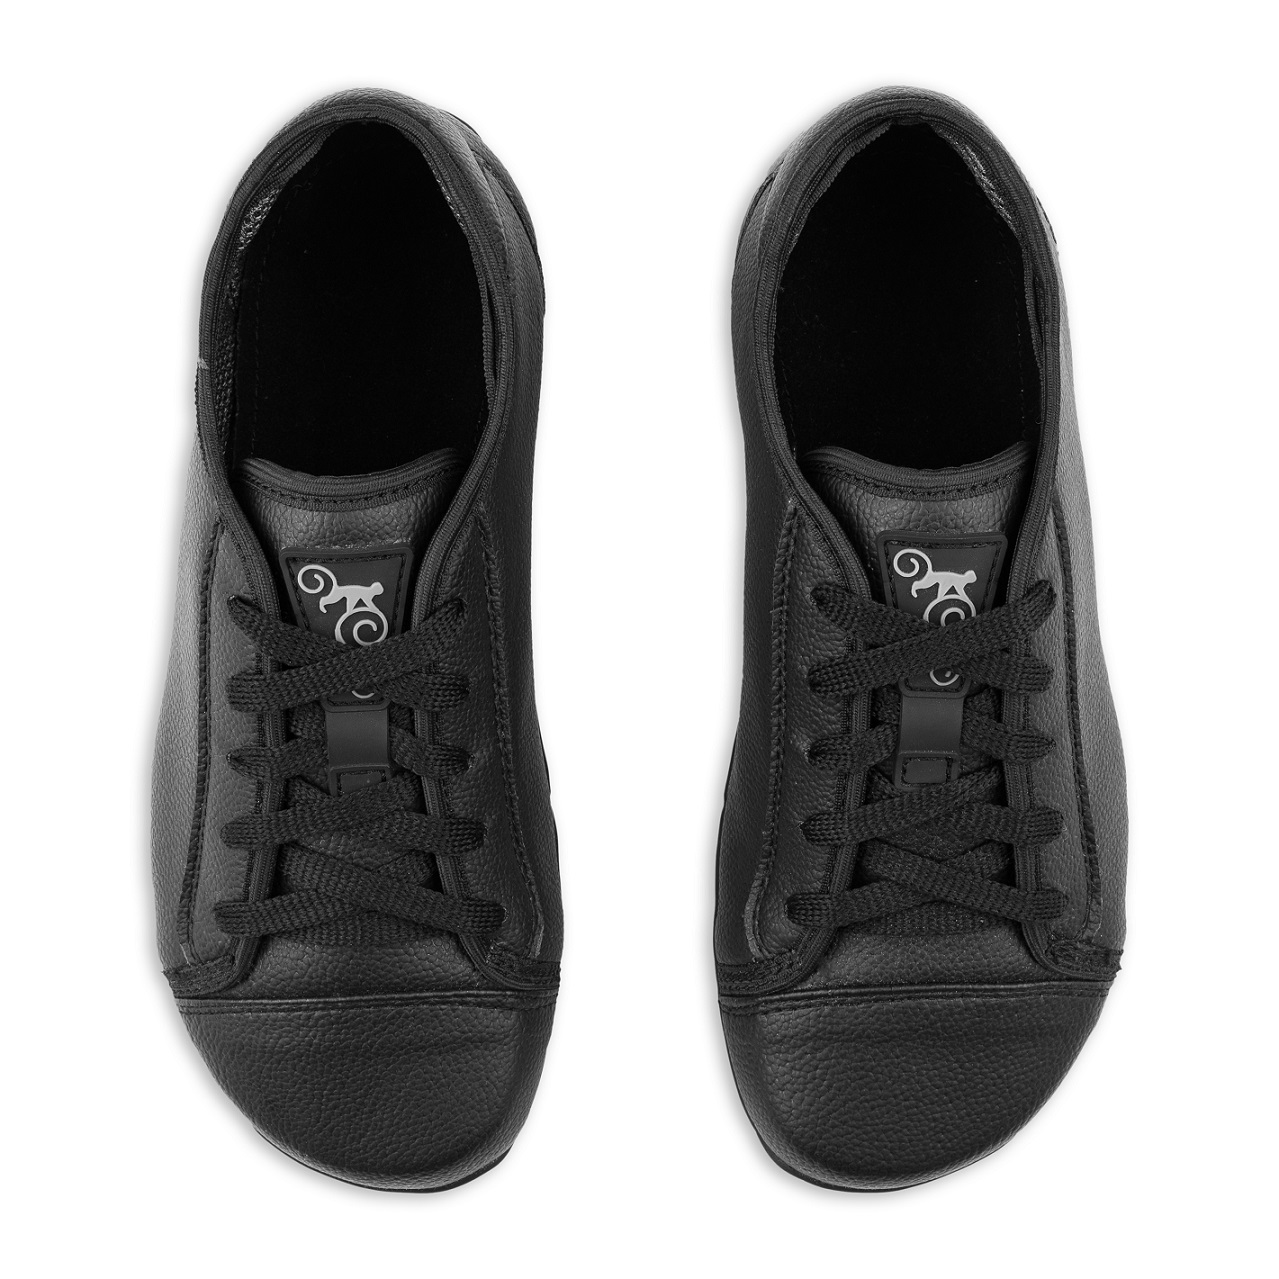 https://magicalshoes24.com/wp-content/uploads/2021/04/buty-minimalistyczne-magcical-shoes-promenade-black-vegan-1.jpg